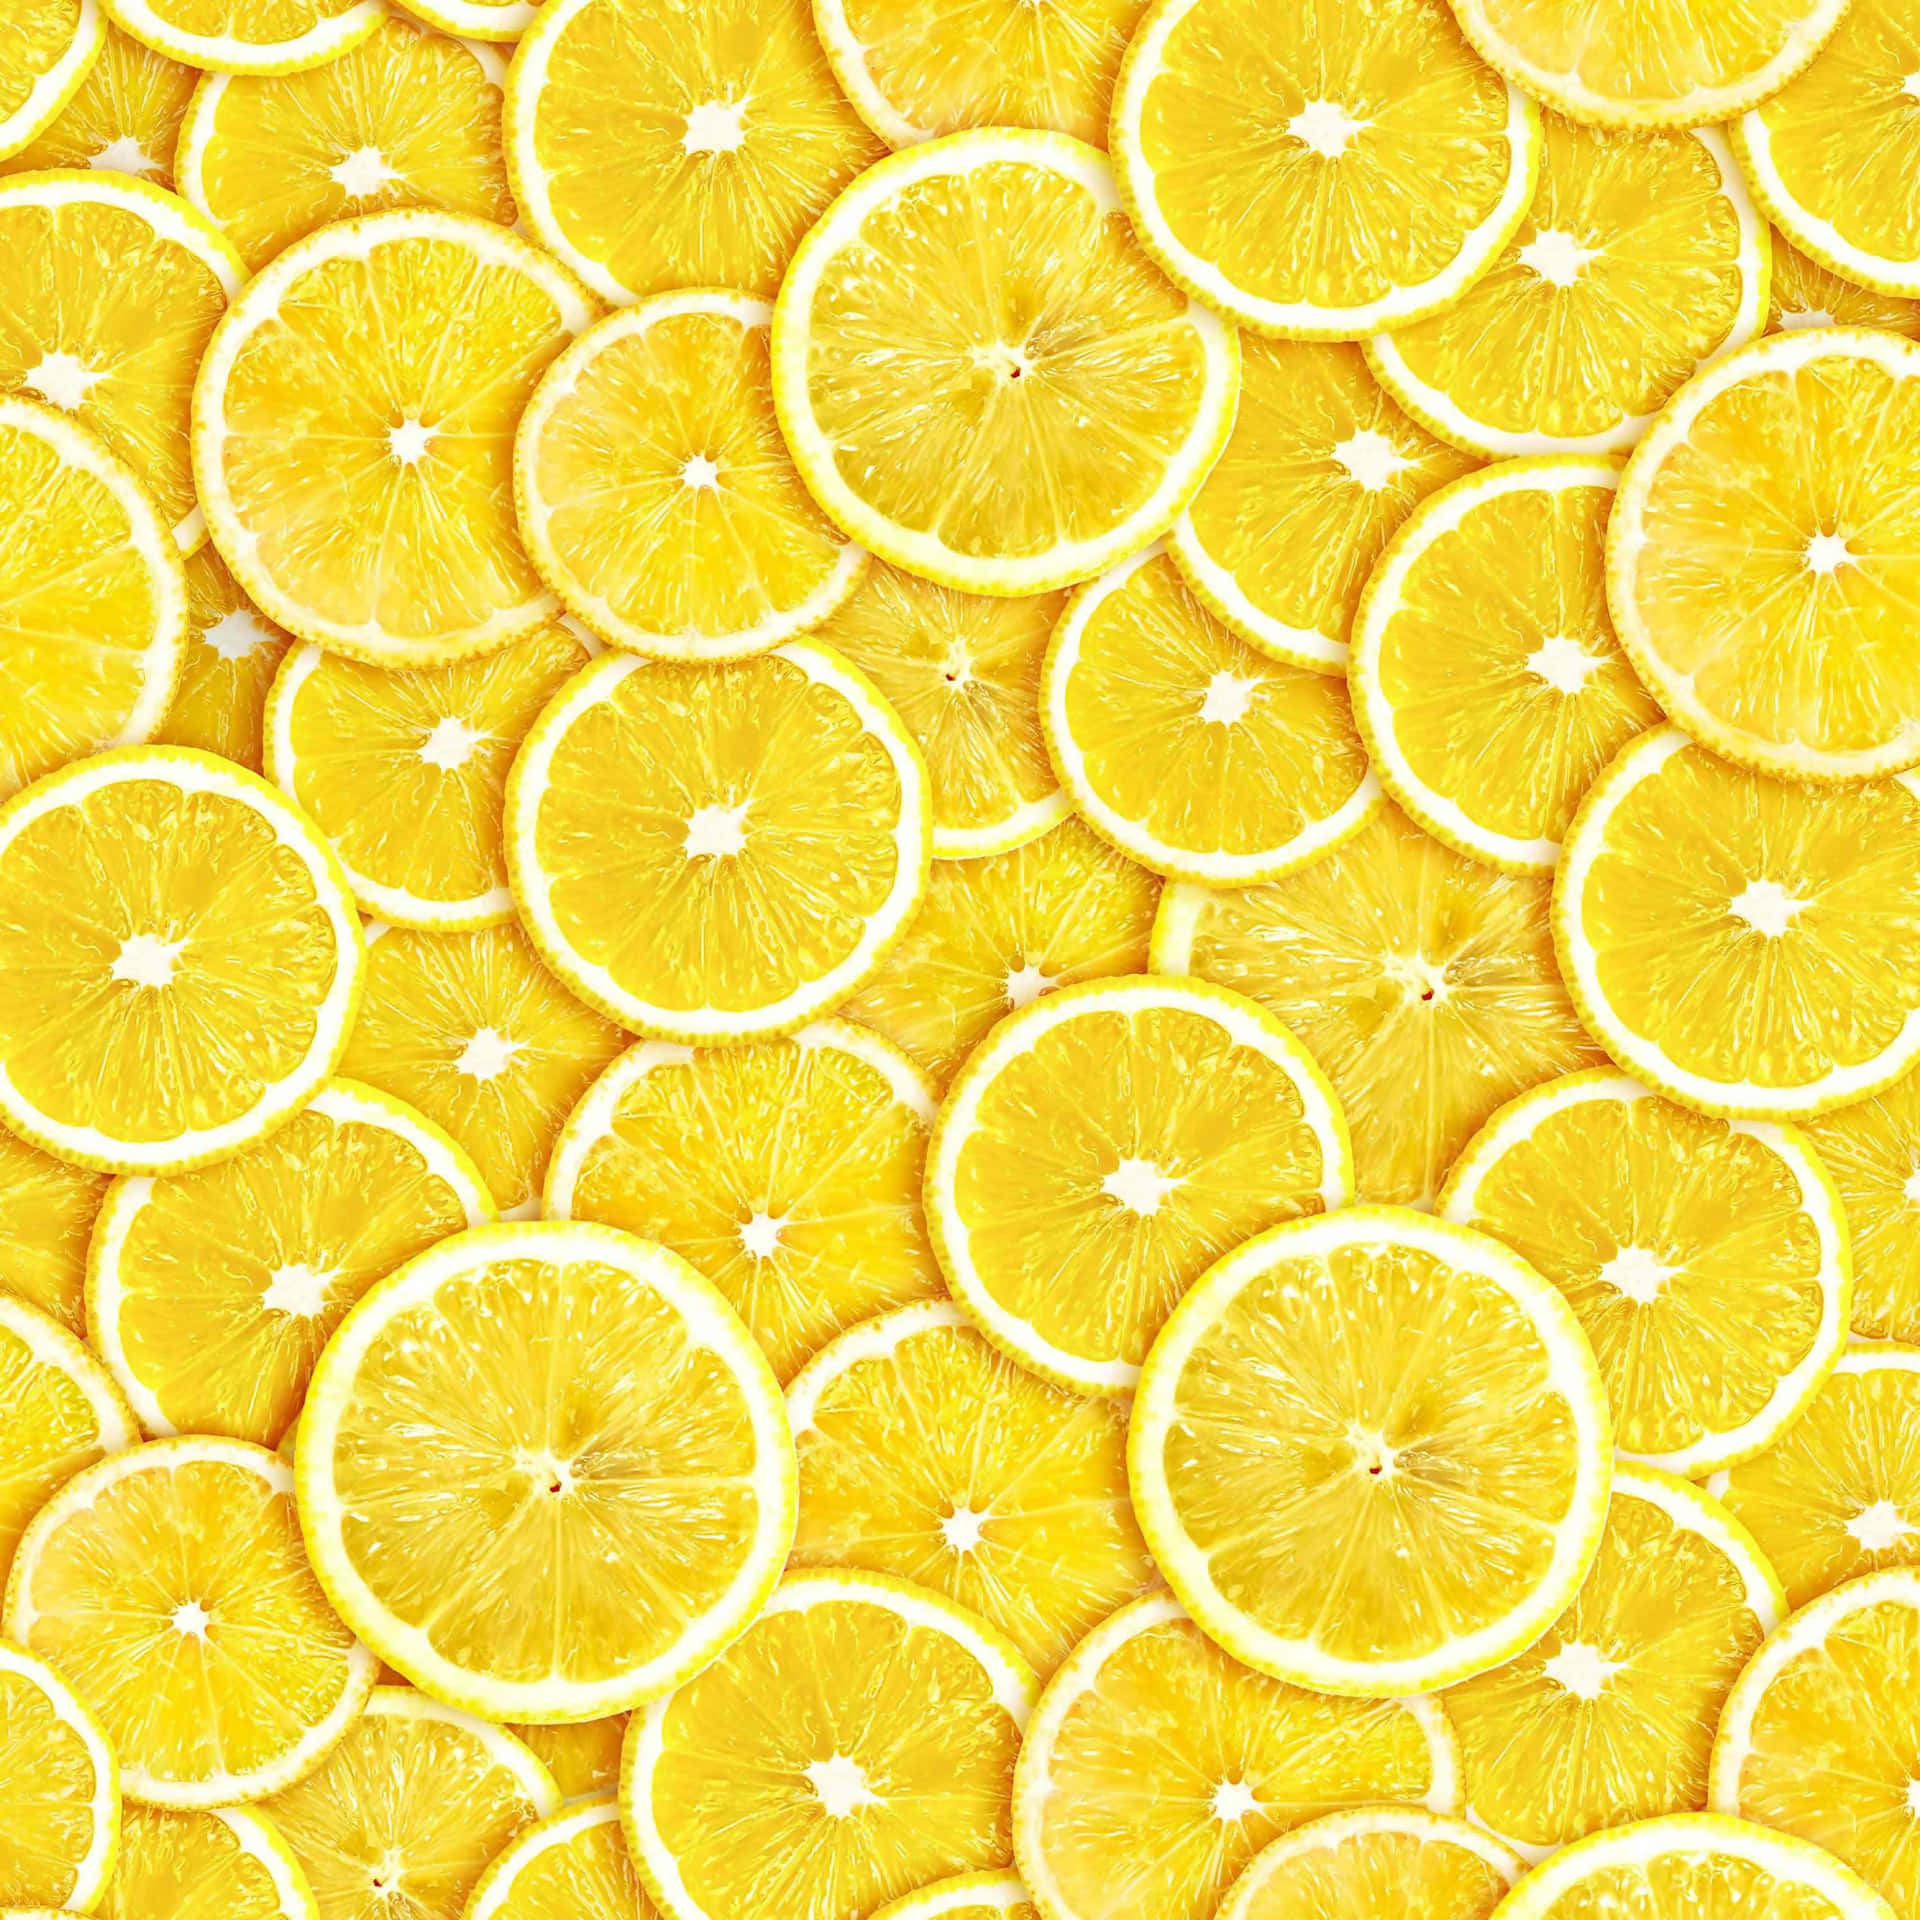 Lemon Iphone Background Wallpaper